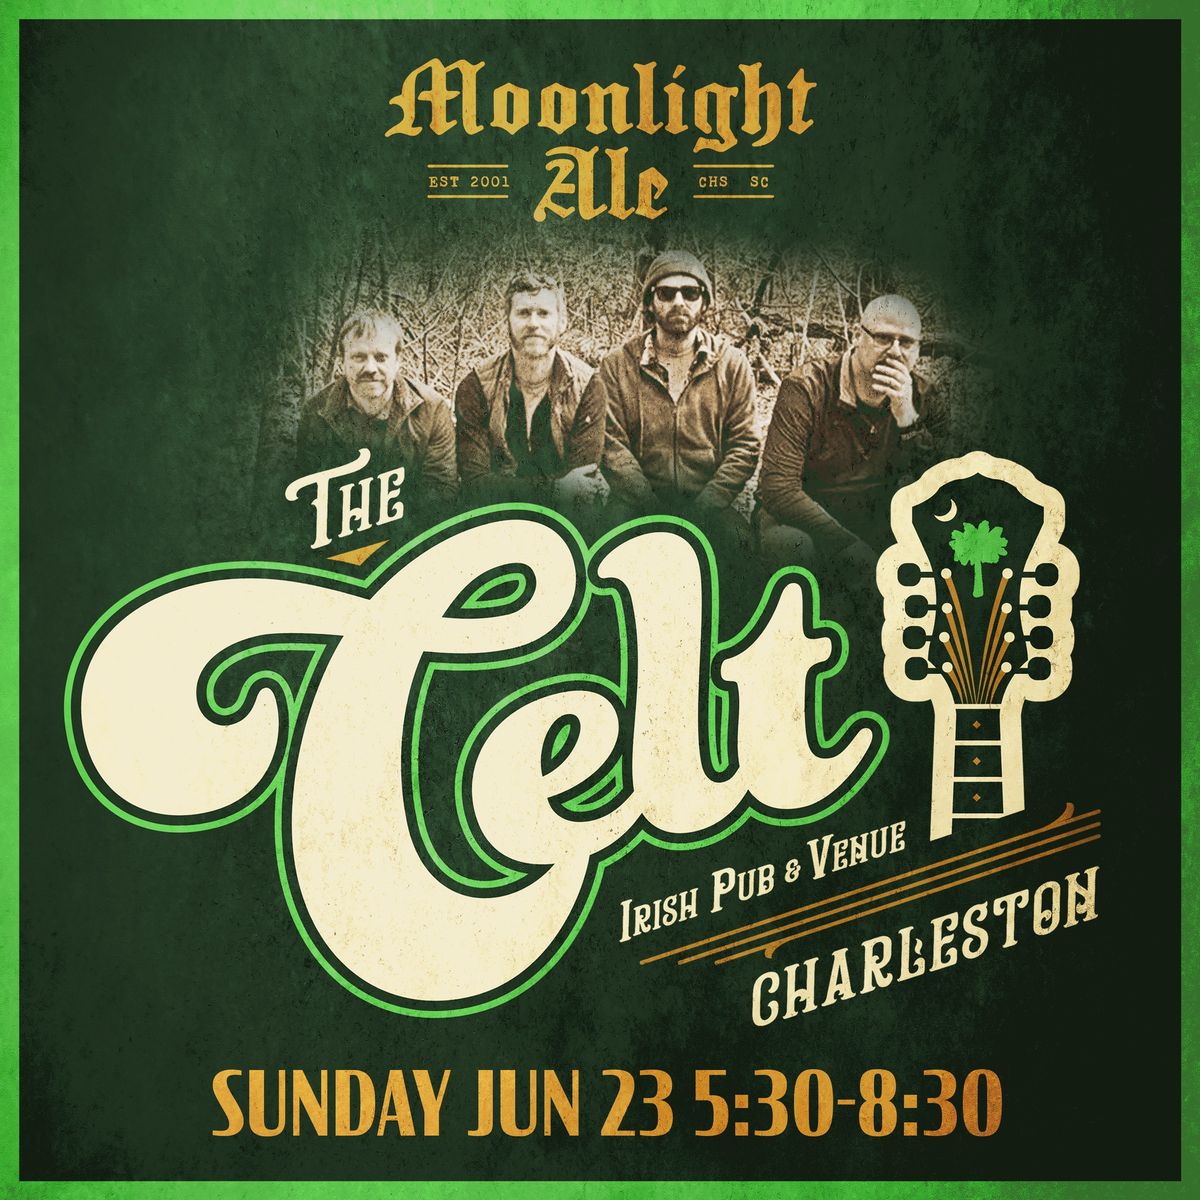 Moonlight Ale at The Celt Irish Pub